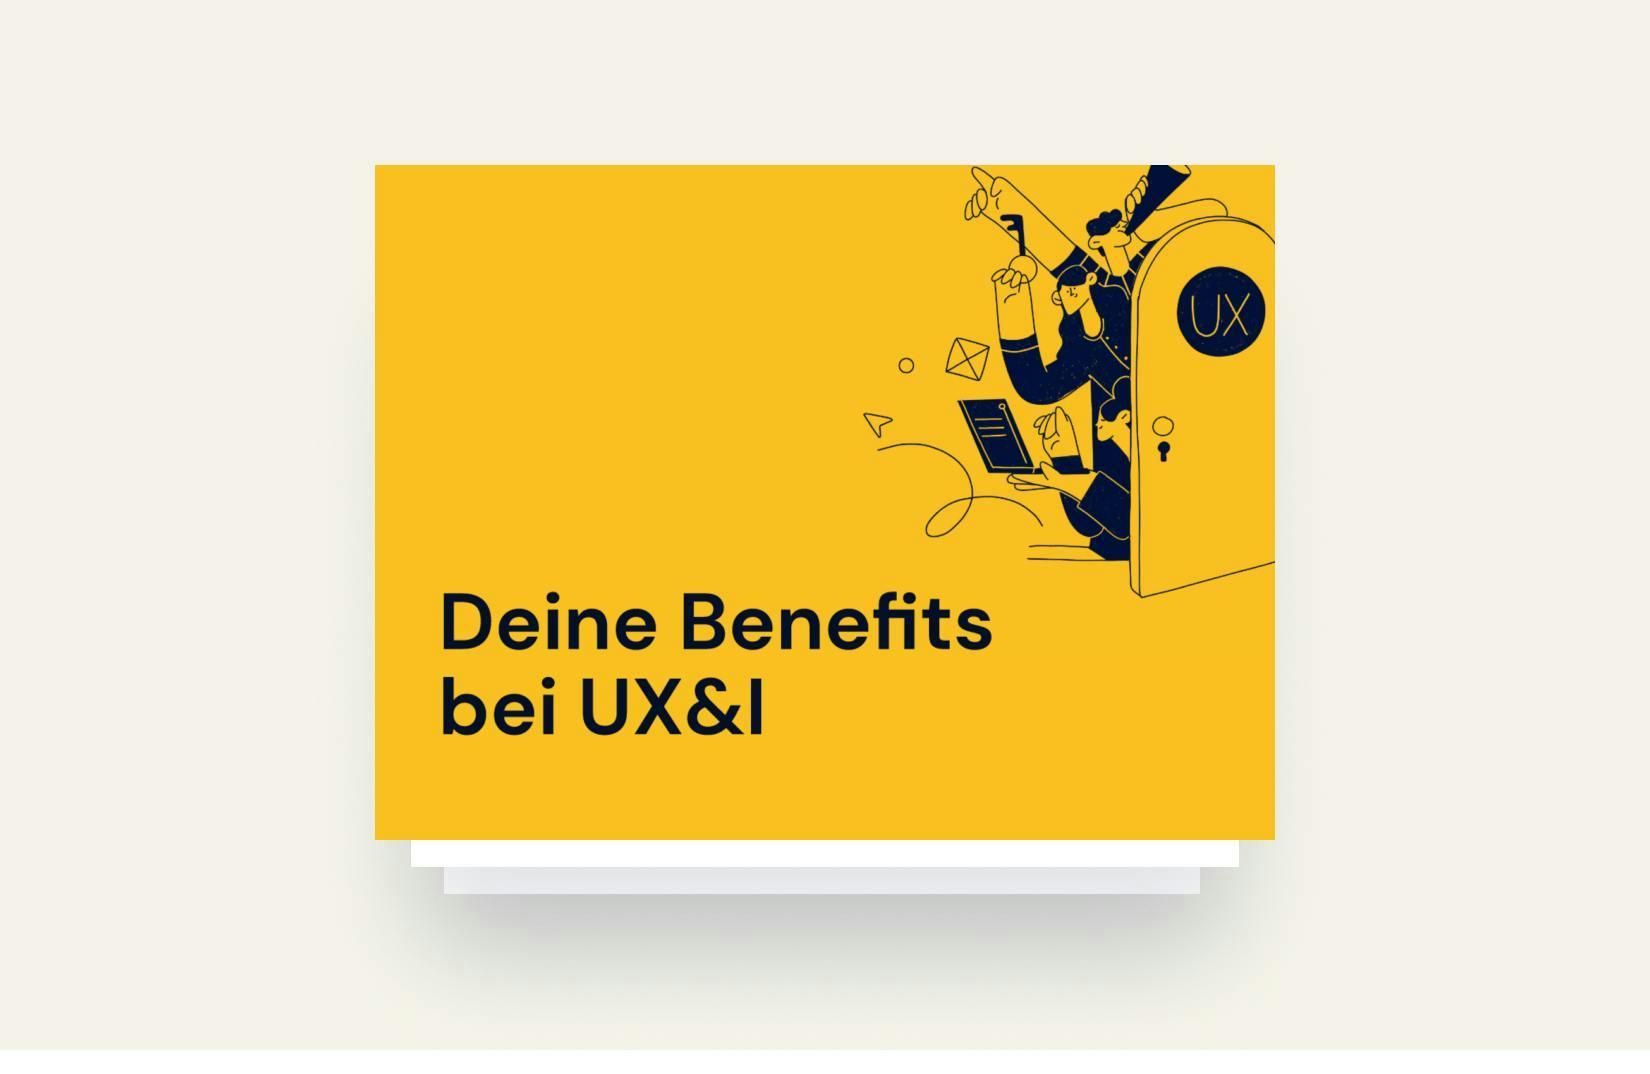 Benefits bei dem UX-Beratunngsunternehmen UX&I